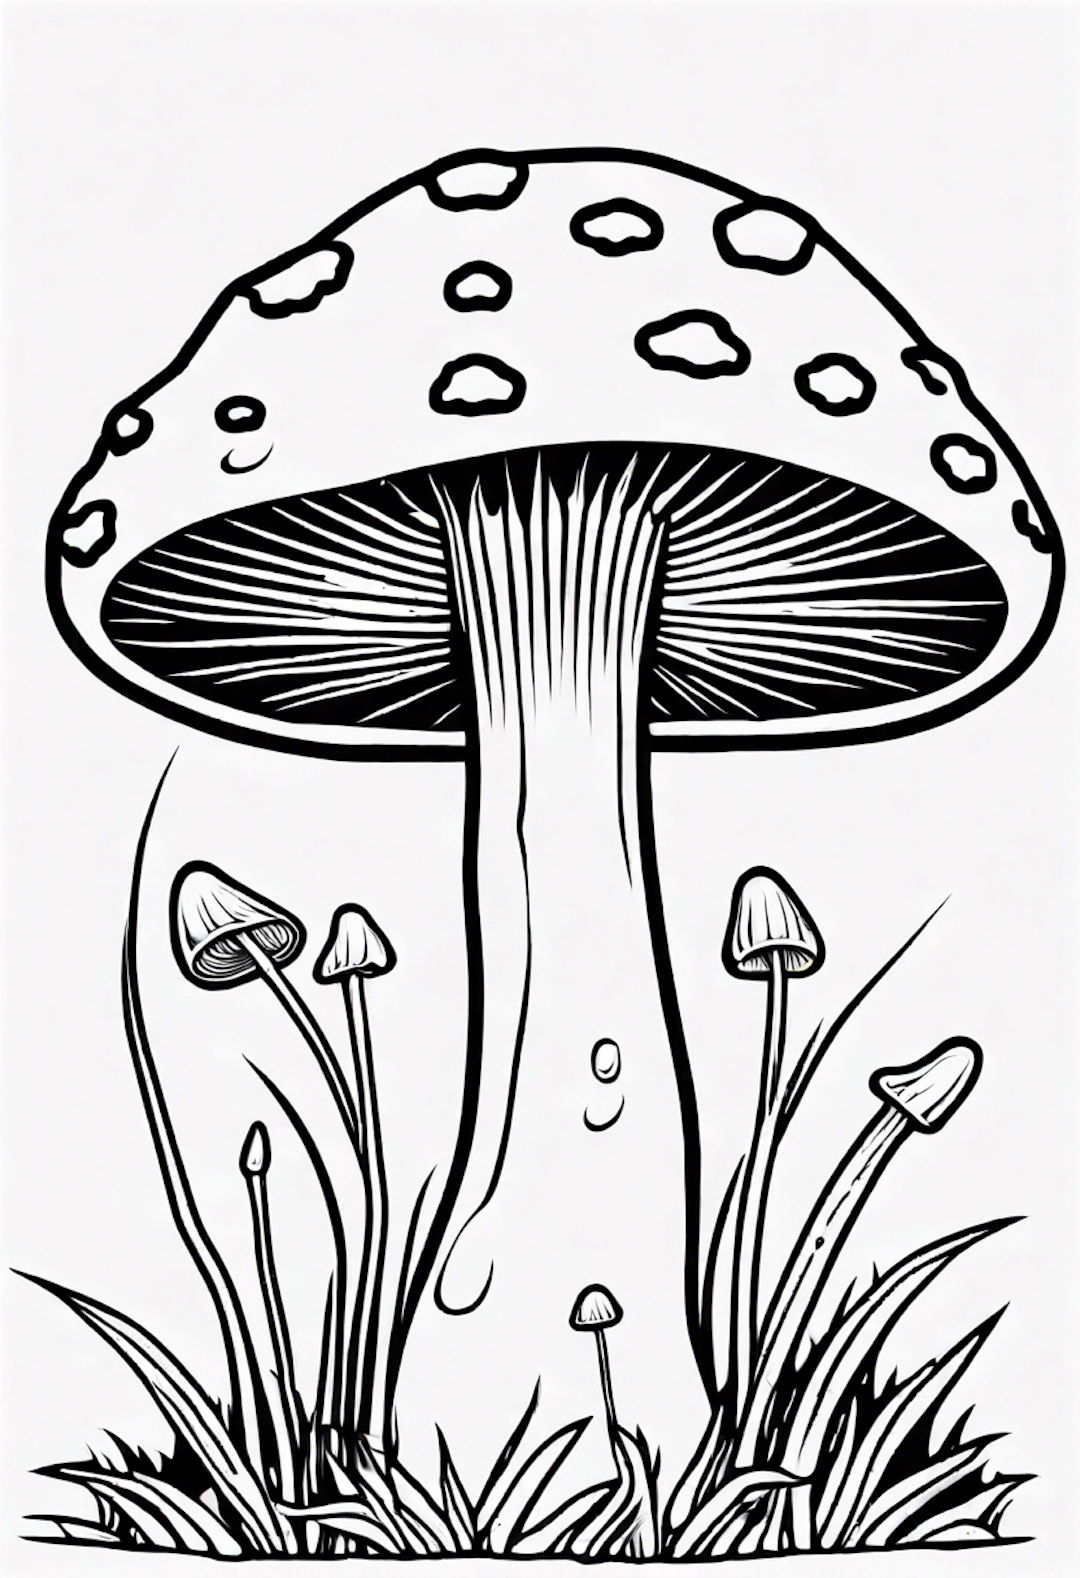 Mushroom With Arms